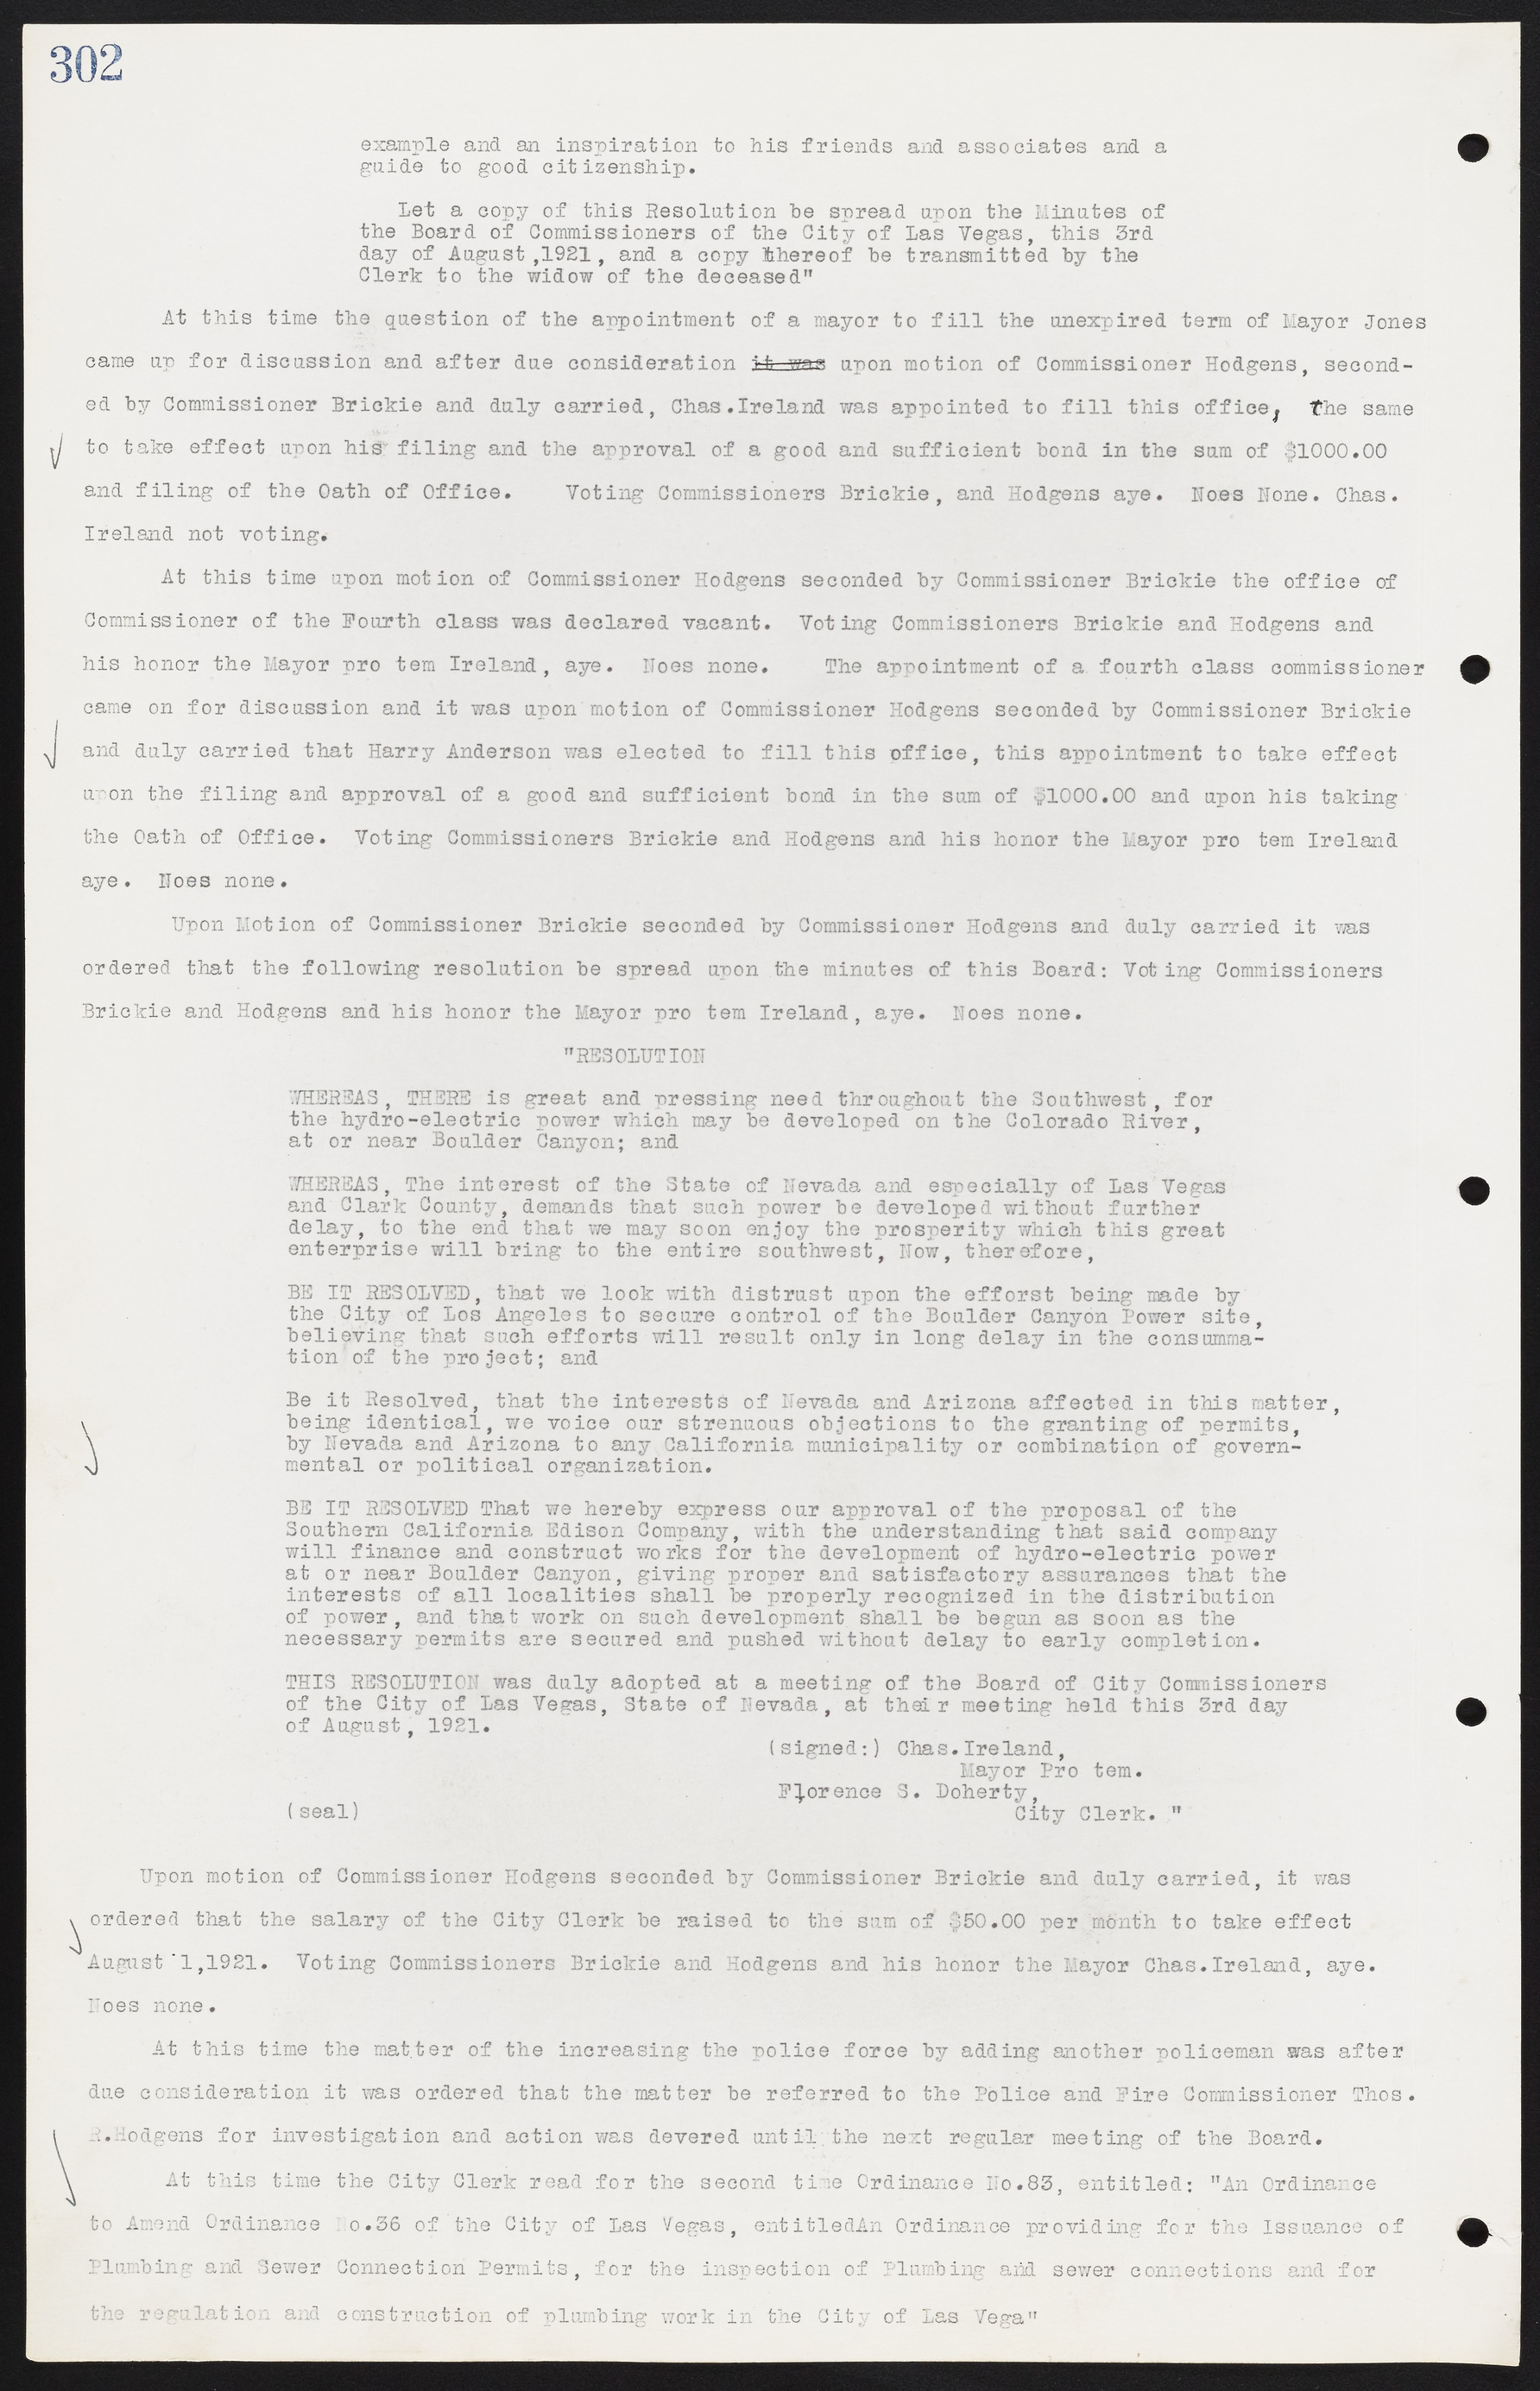 Las Vegas City Commission Minutes, June 22, 1911 to February 7, 1922, lvc000001-318